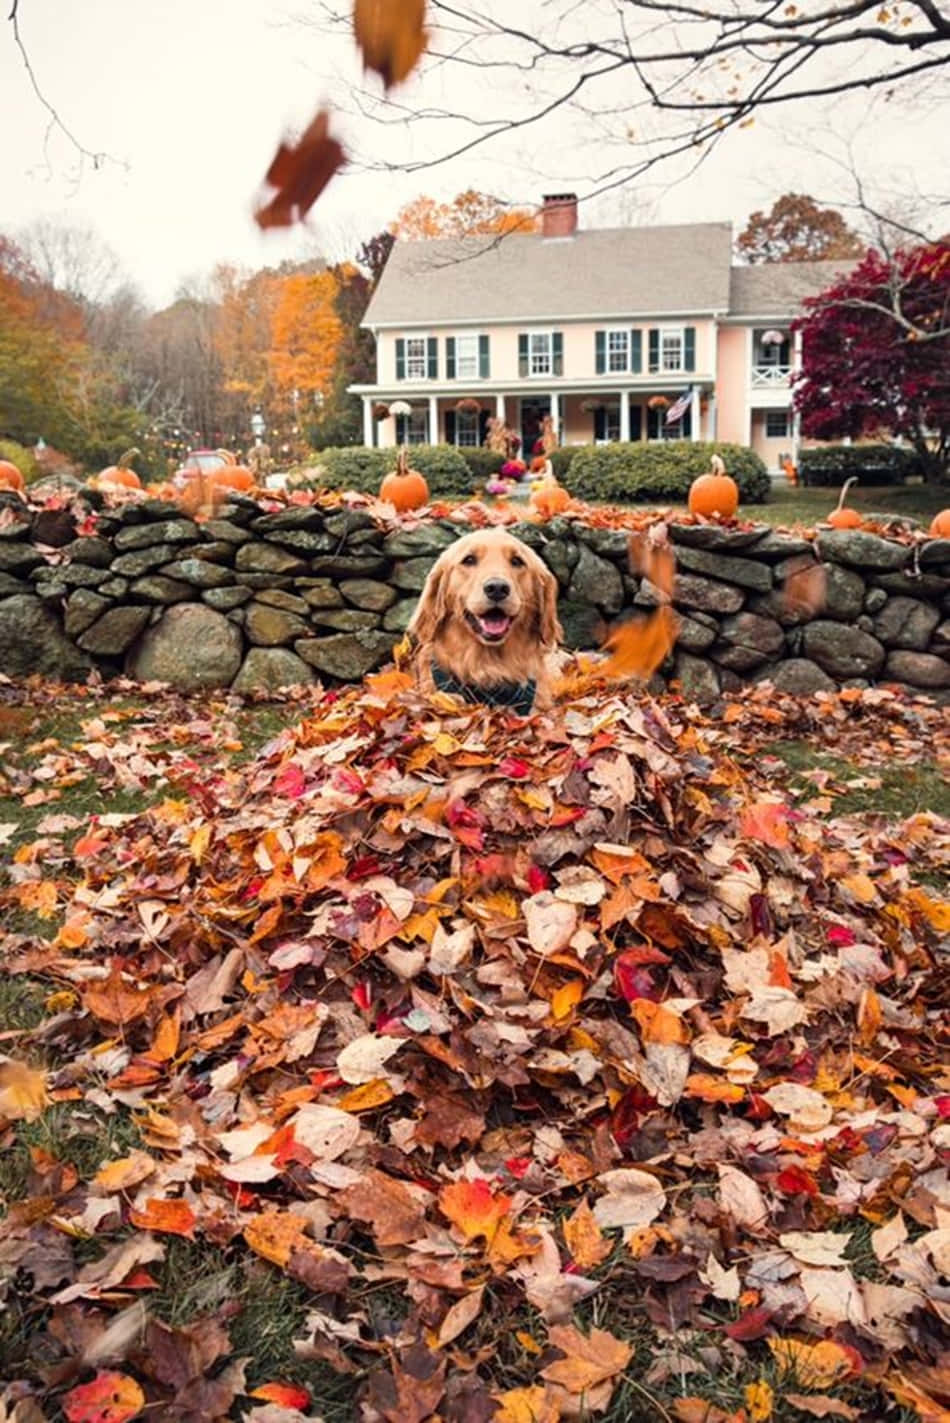 Pinterest Golden Retriever Dog In Autumn Leaf Pile Wallpaper